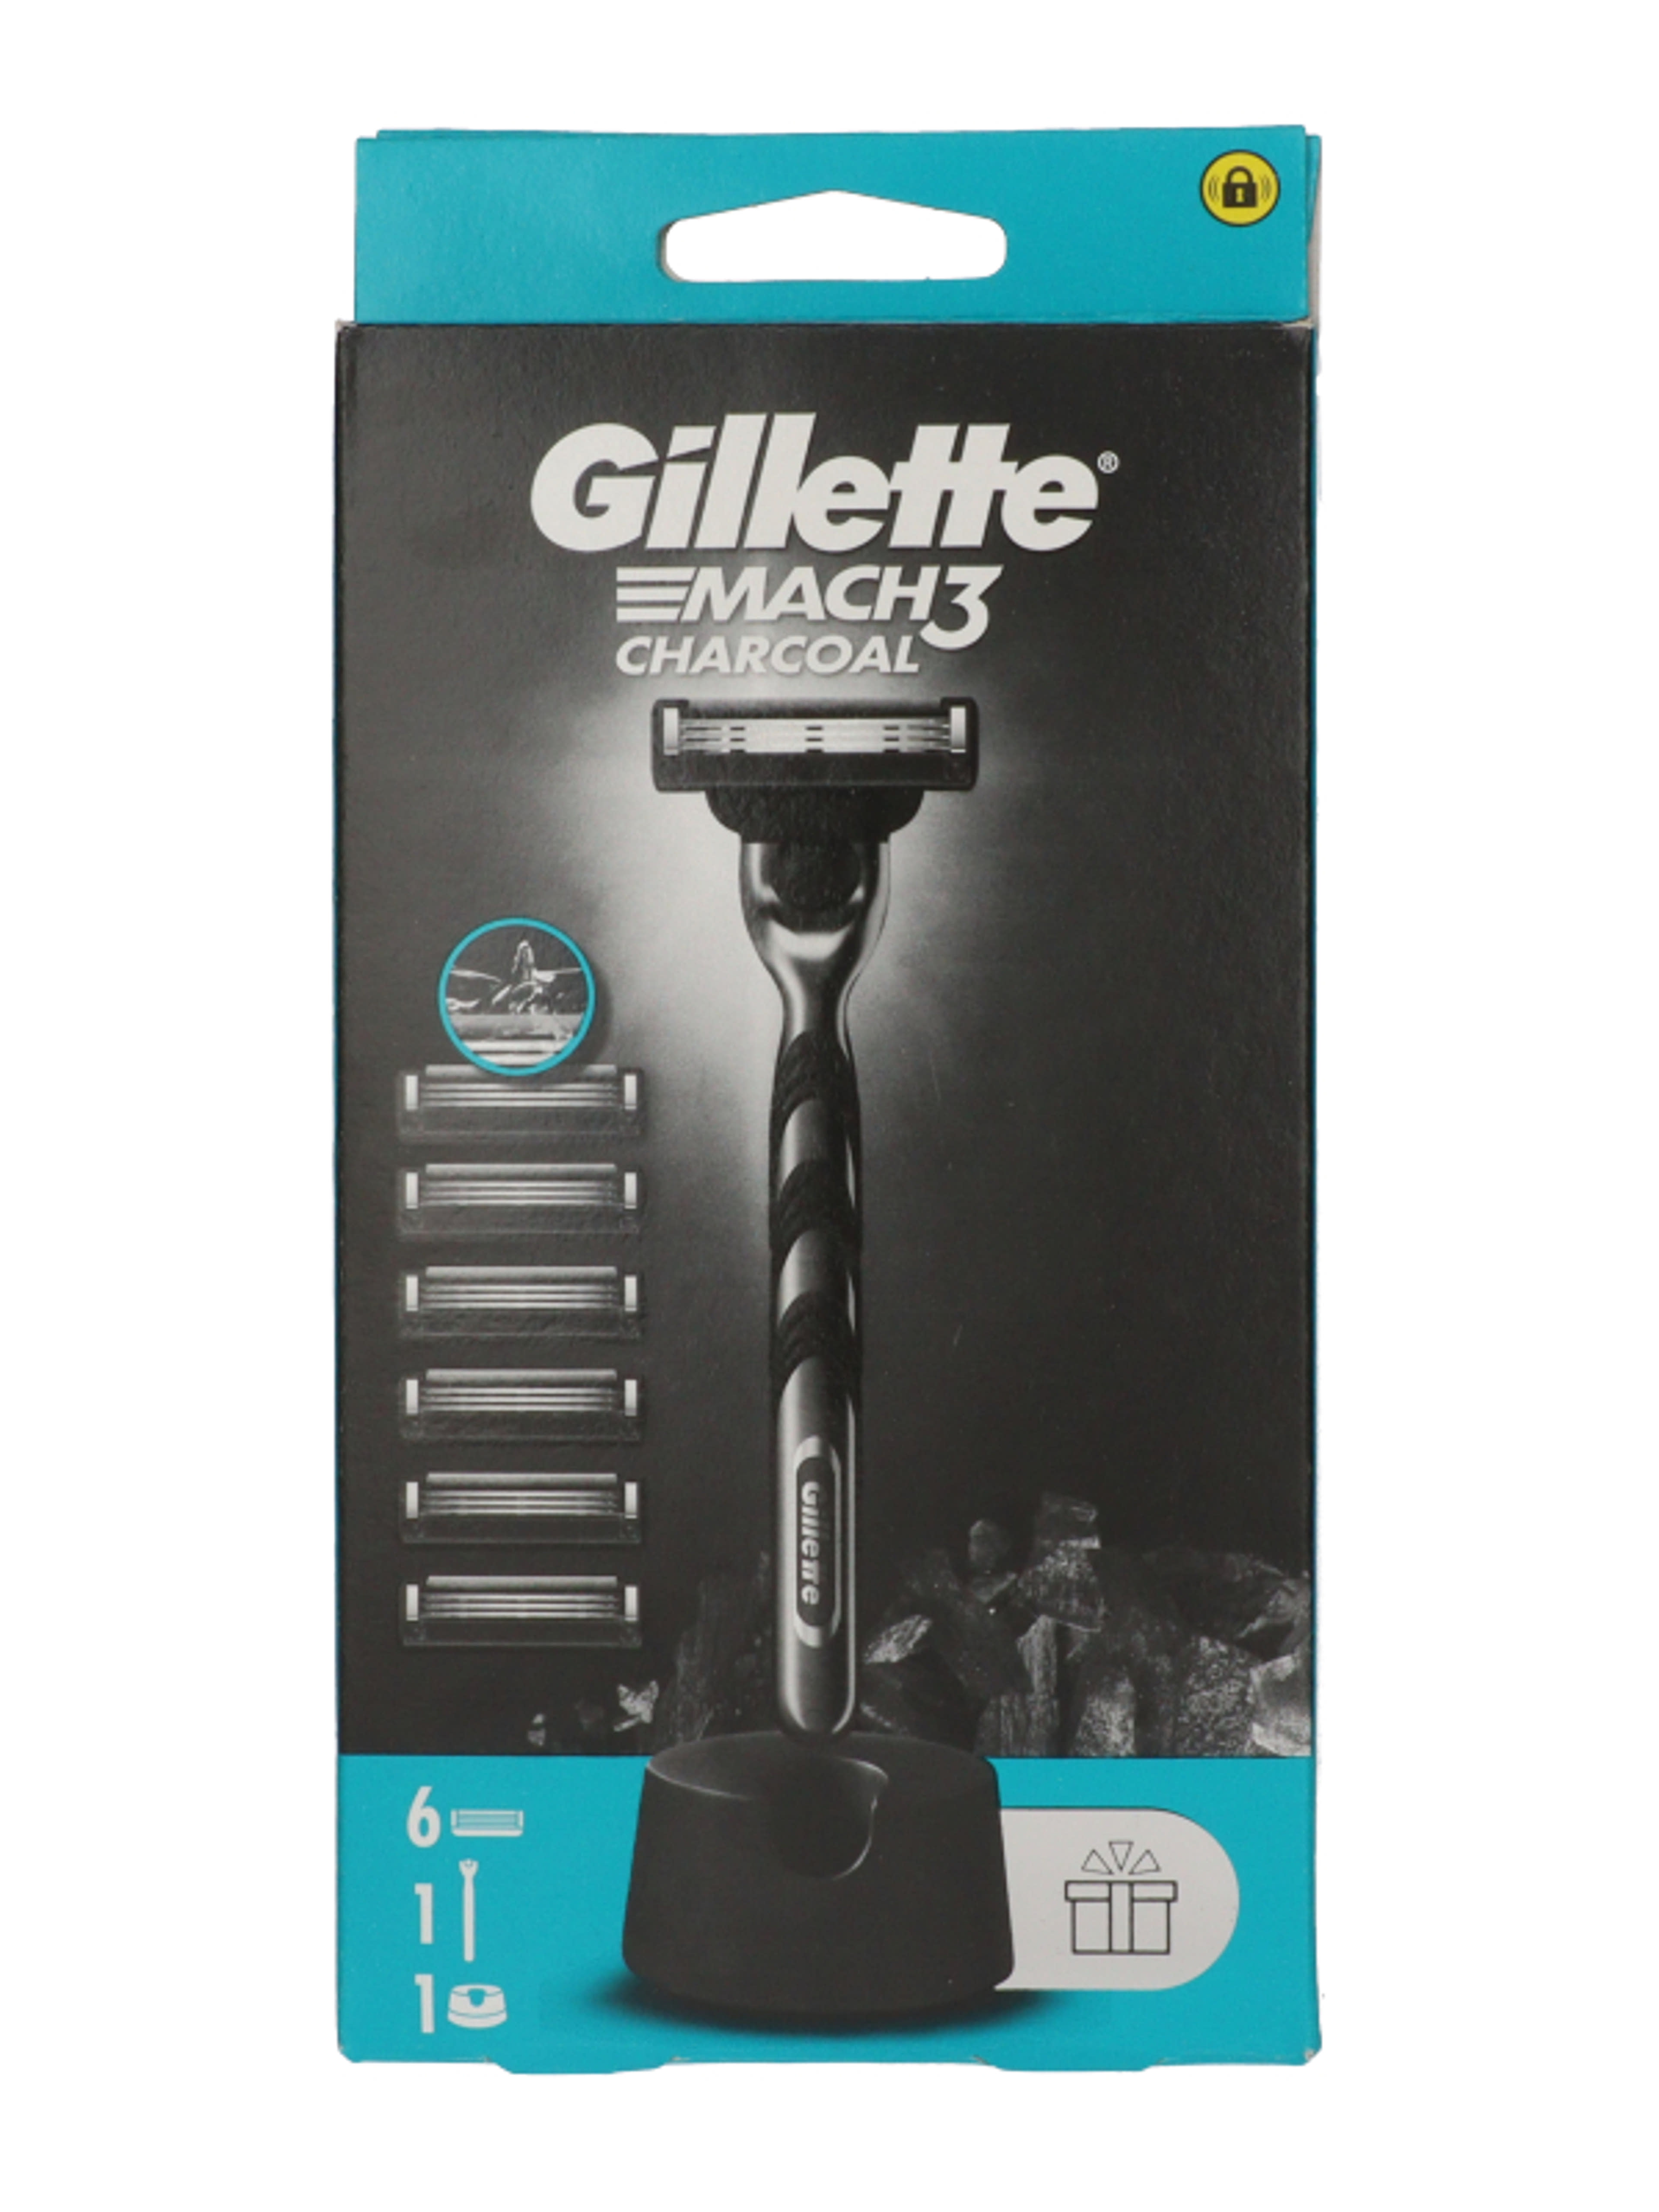 Gillette Mach3 Charcoal férfi borotva készülék 6 db borotvabetéttel - 1 db-8